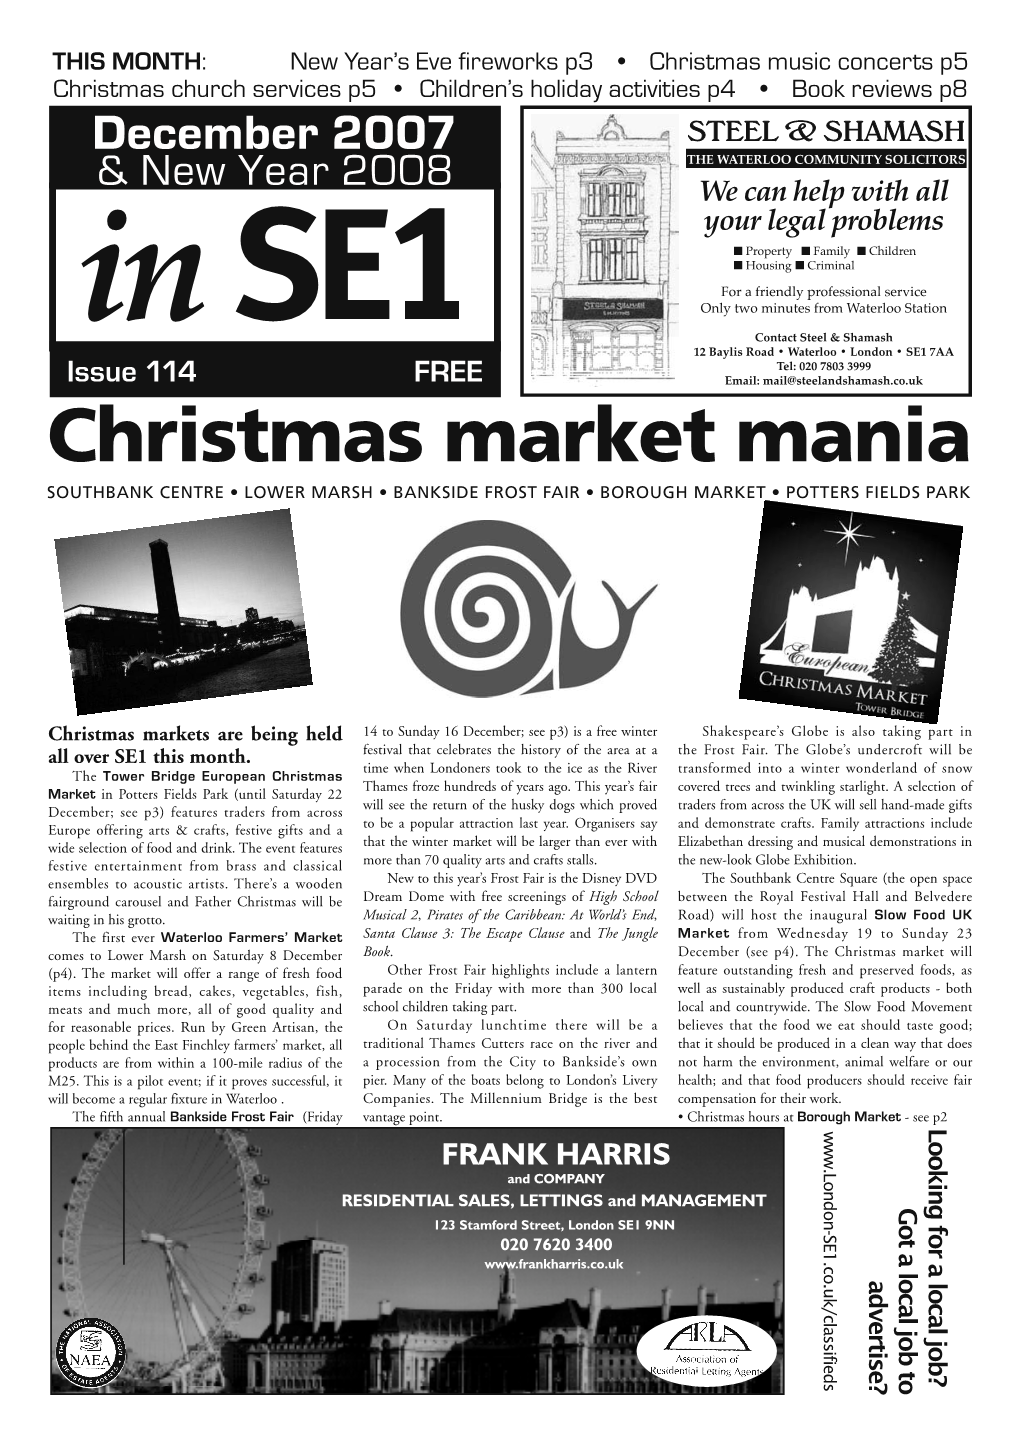 Christmas Market Mania SOUTHBANK CENTRE • LOWER MARSH • BANKSIDE FROST FAIR • BOROUGH MARKET • POTTERS FIELDS PARK